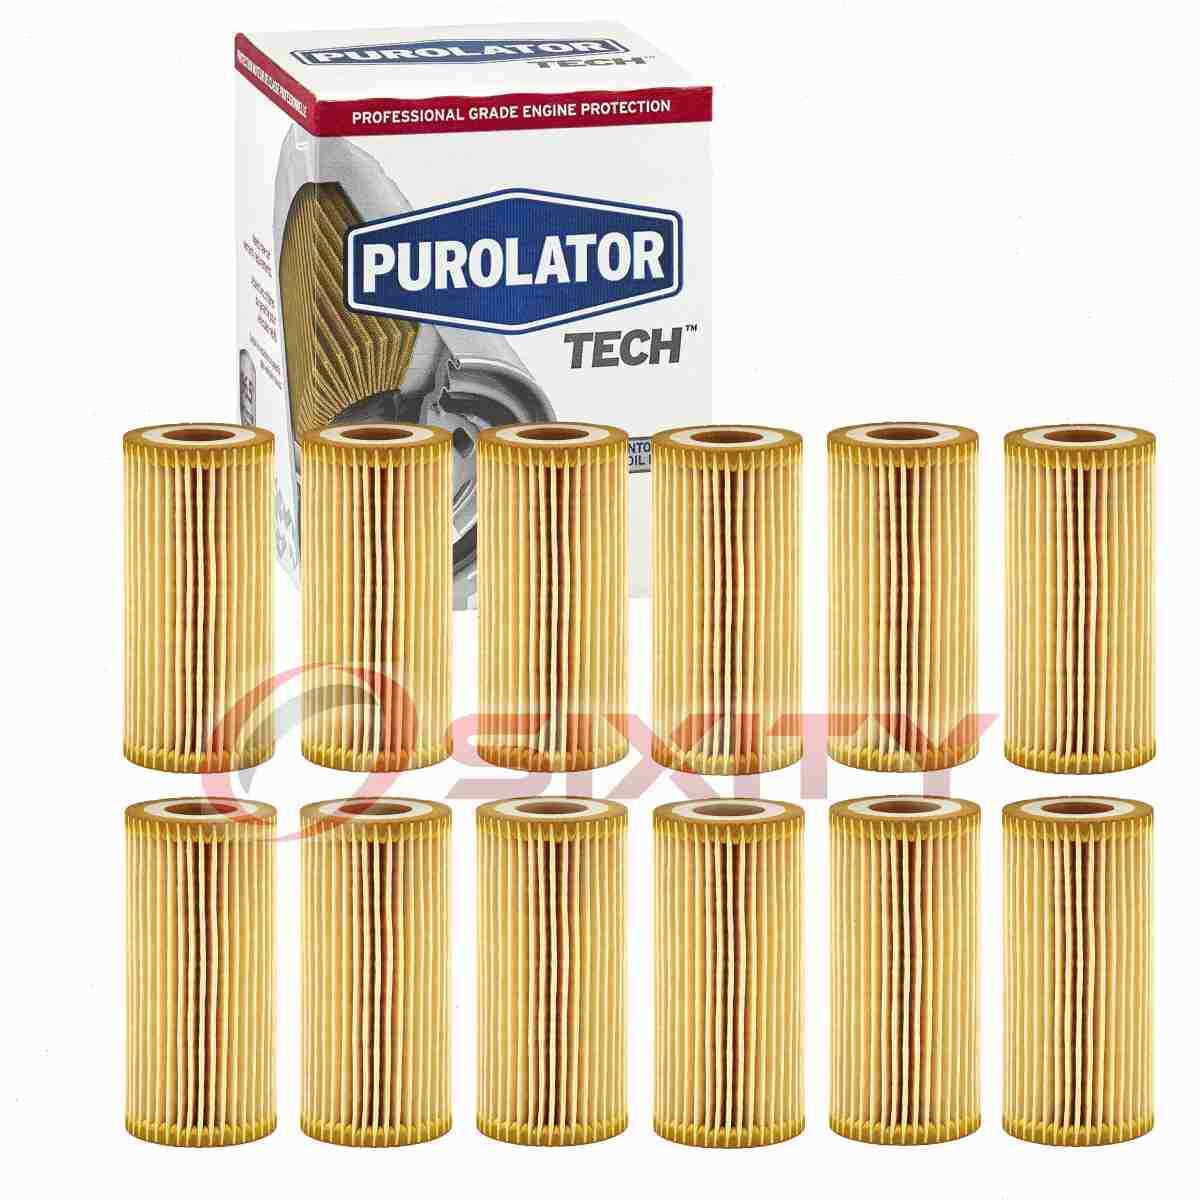 12 pc Purolator TECH TL28161 Engine Oil Filters for X10435 X10260 WP1017 zf